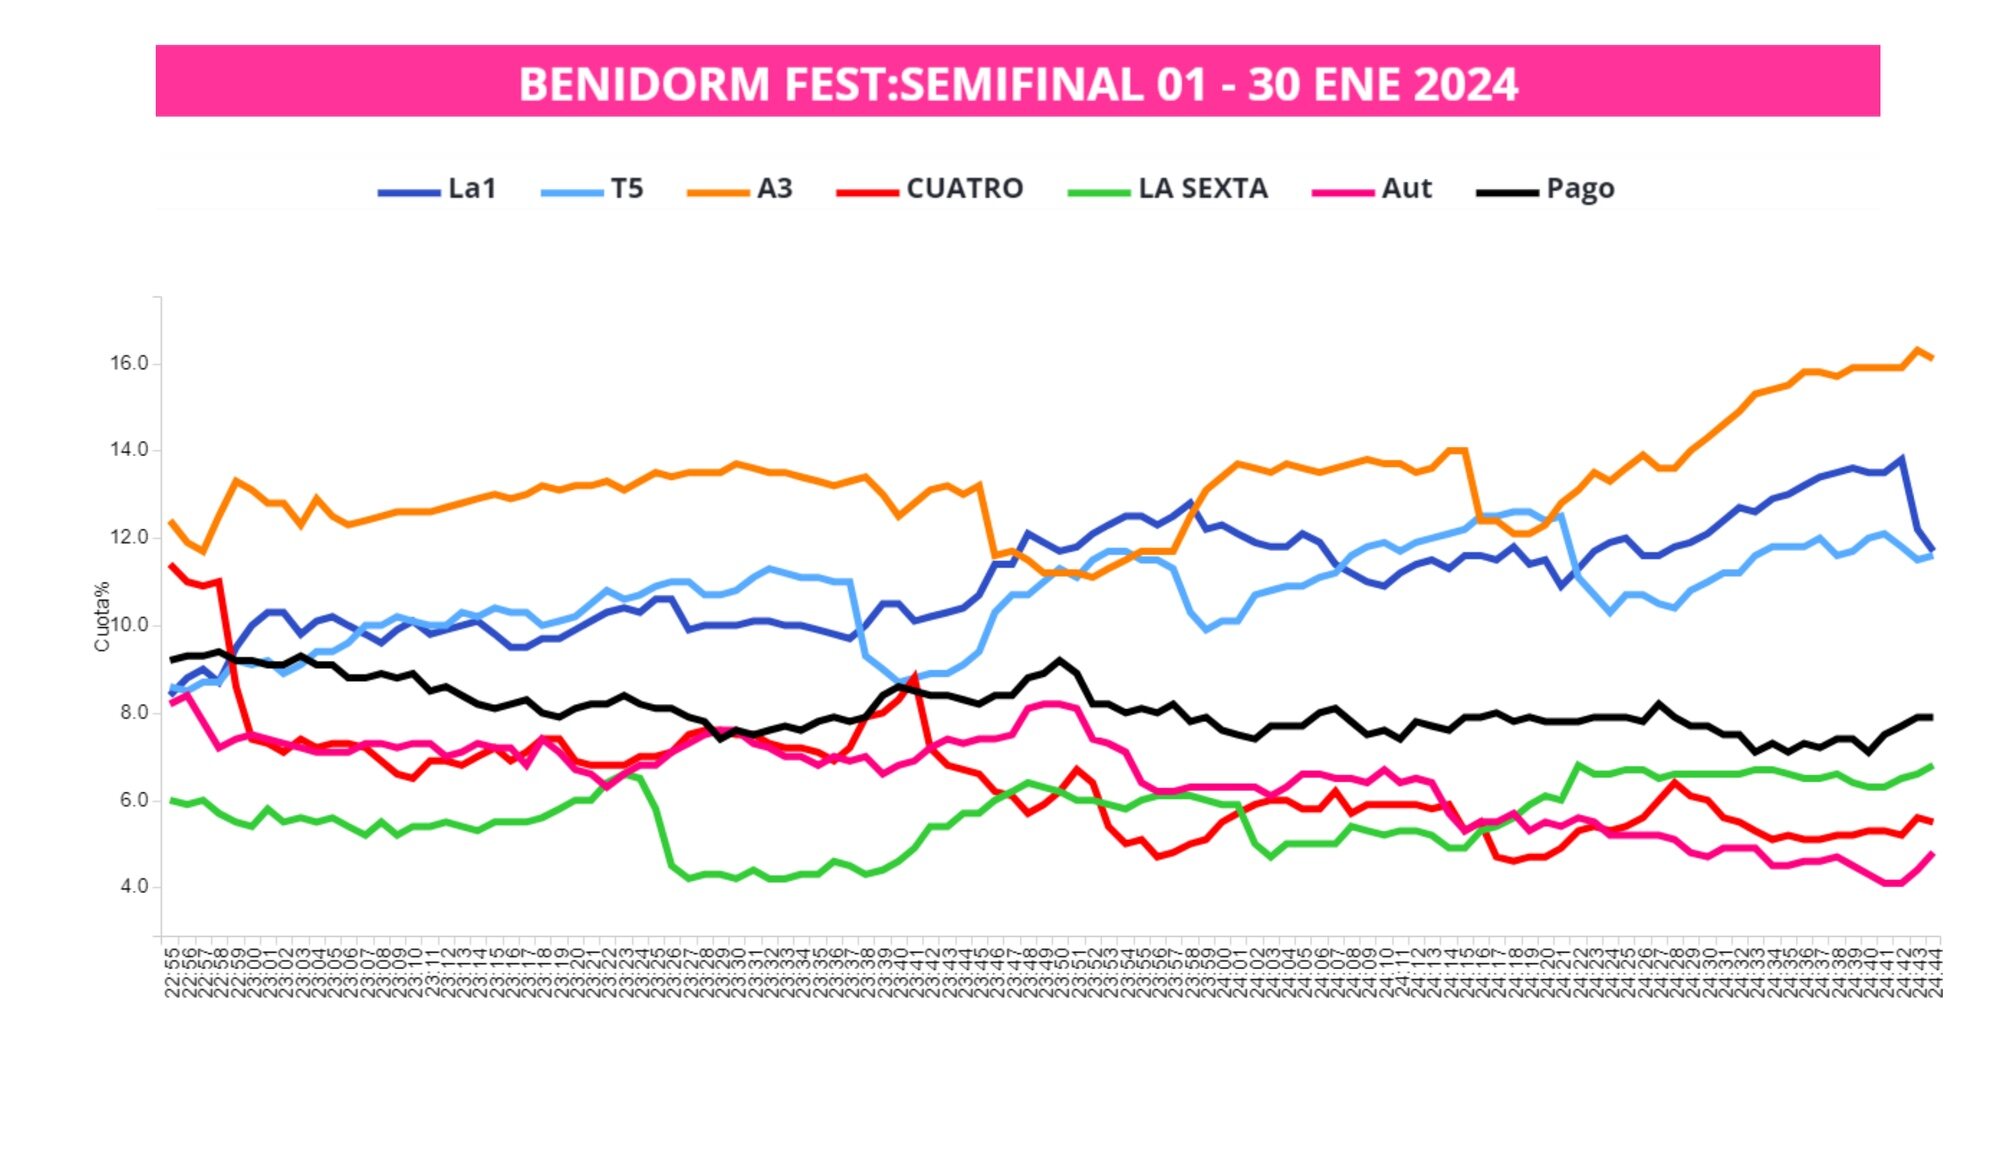 Competencia minuto a minuto en la Semifinal 1 del Benidorm Fest 2024